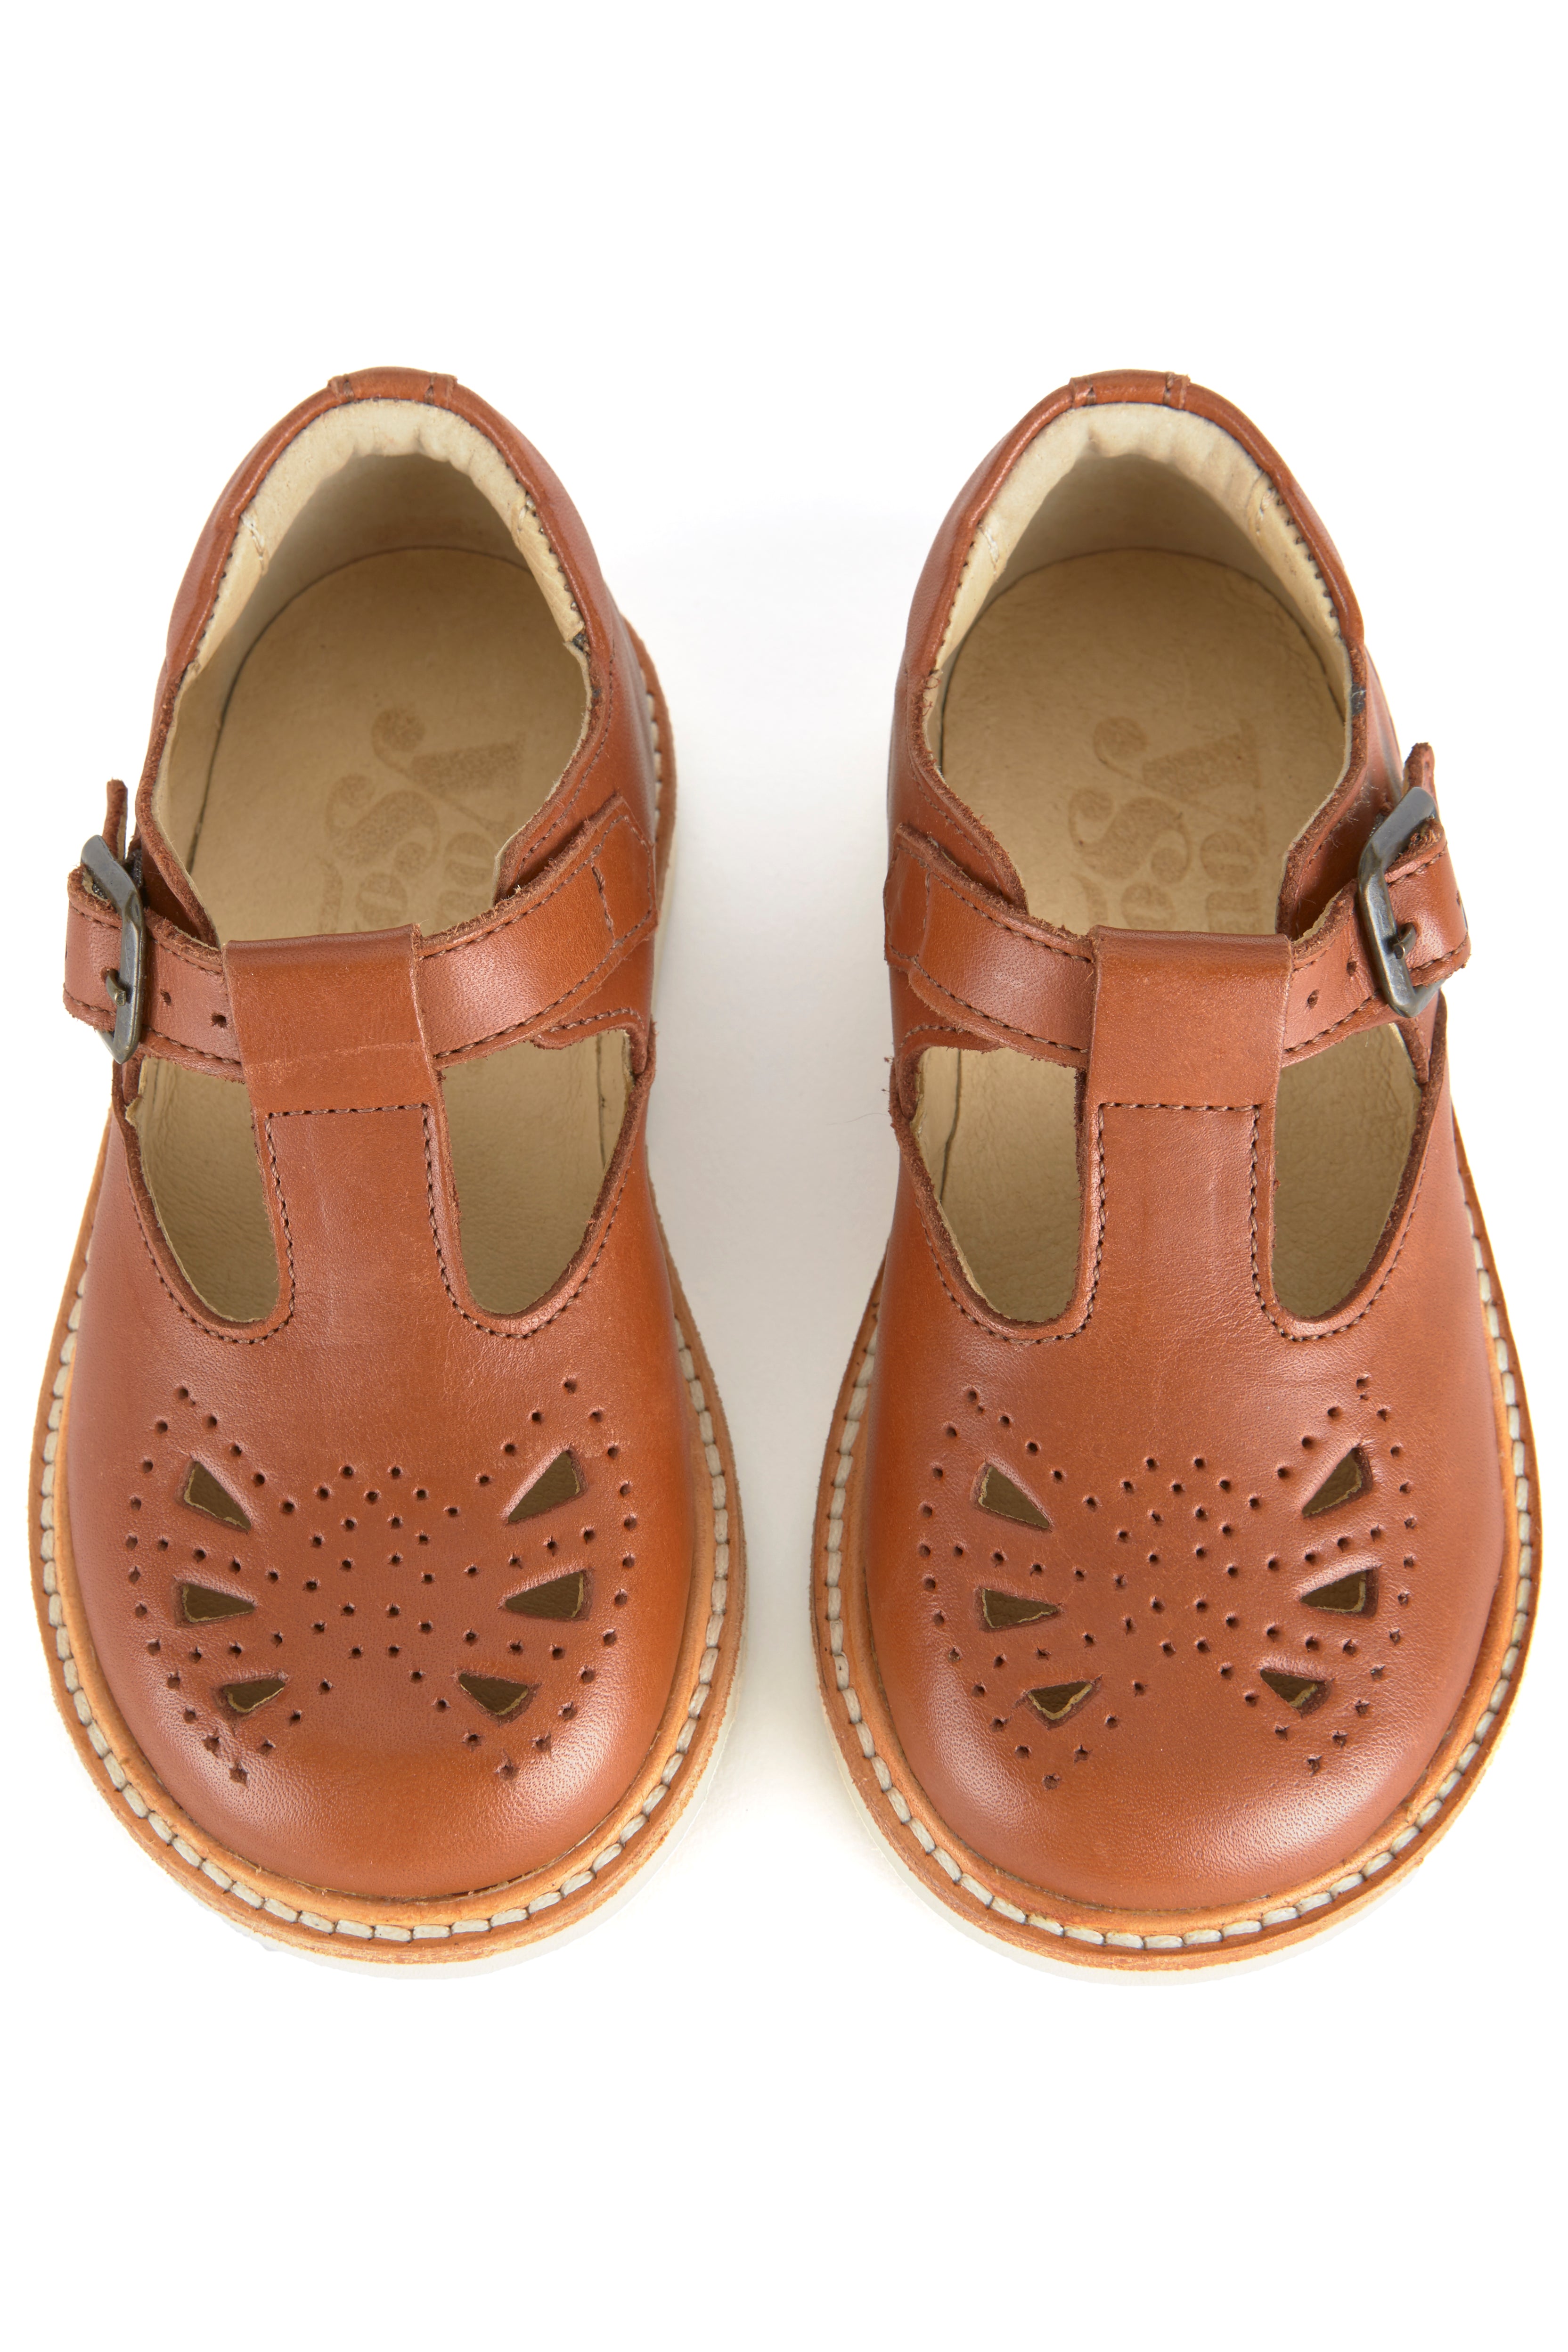 young soles shoes australia